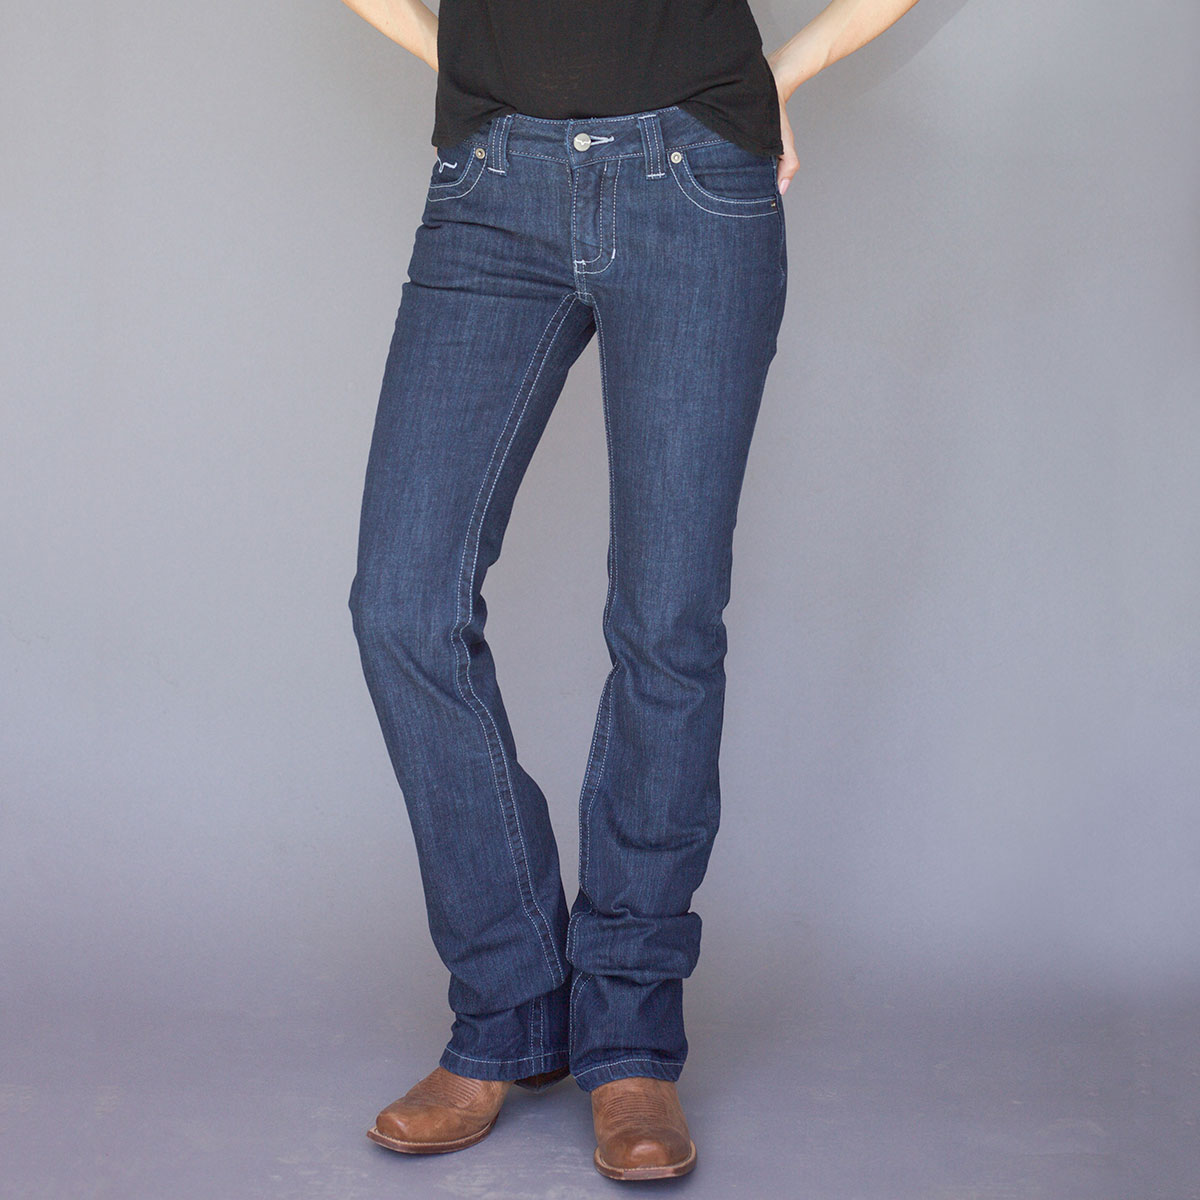 kimes women's jeans